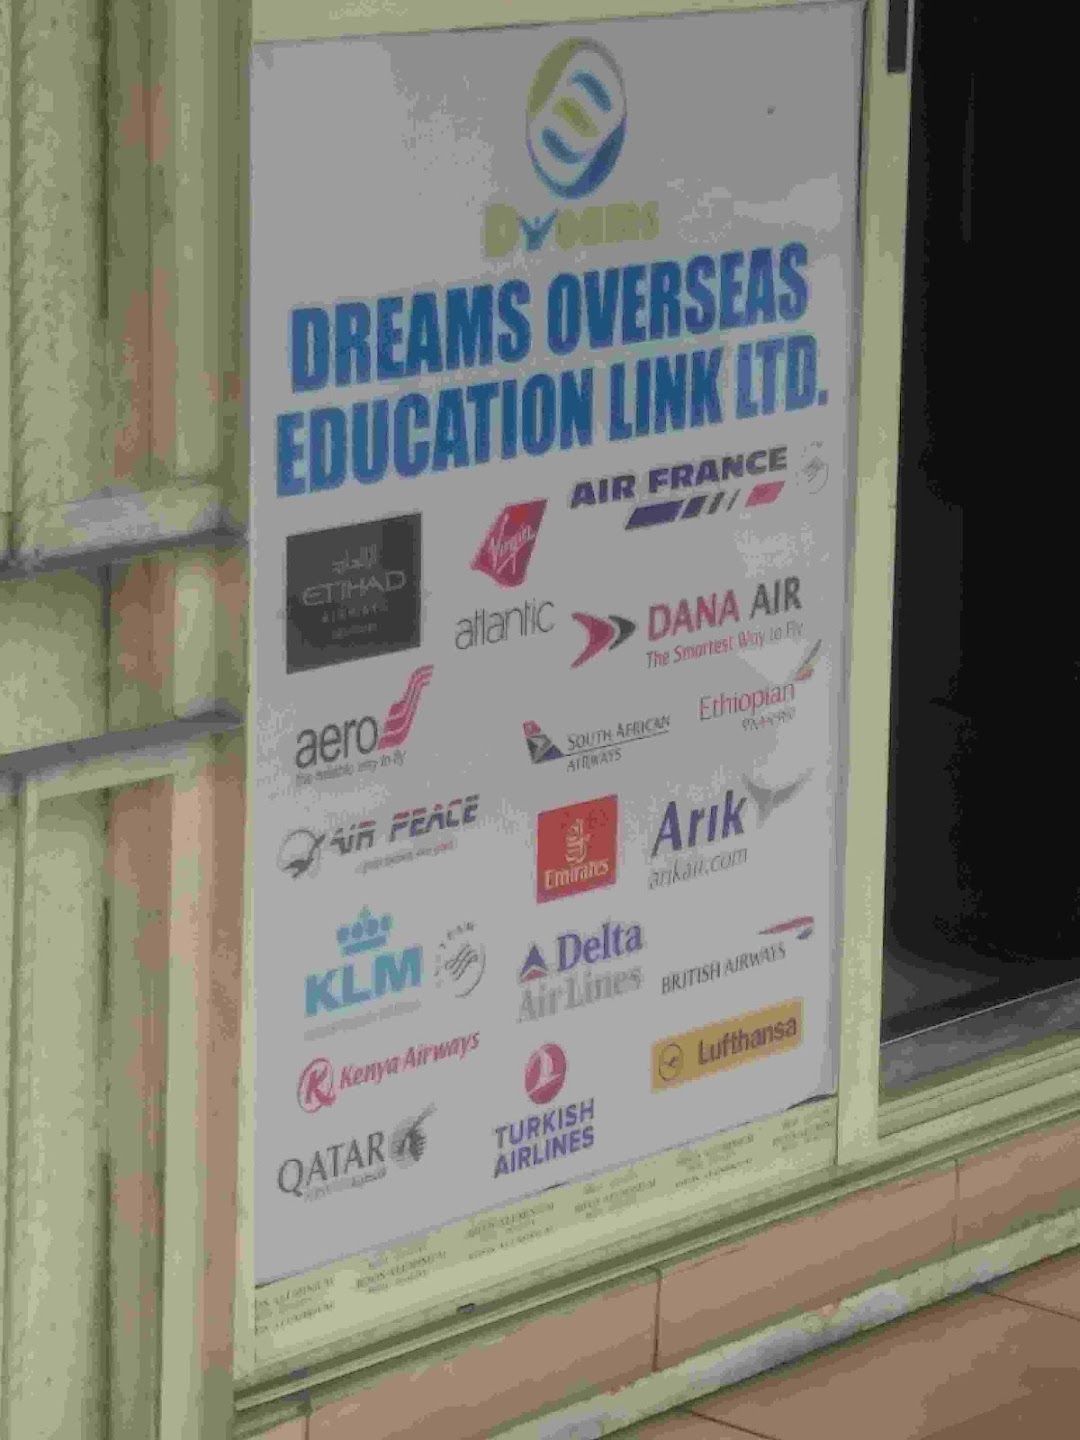 Dreams Overseas Education Link Ltd